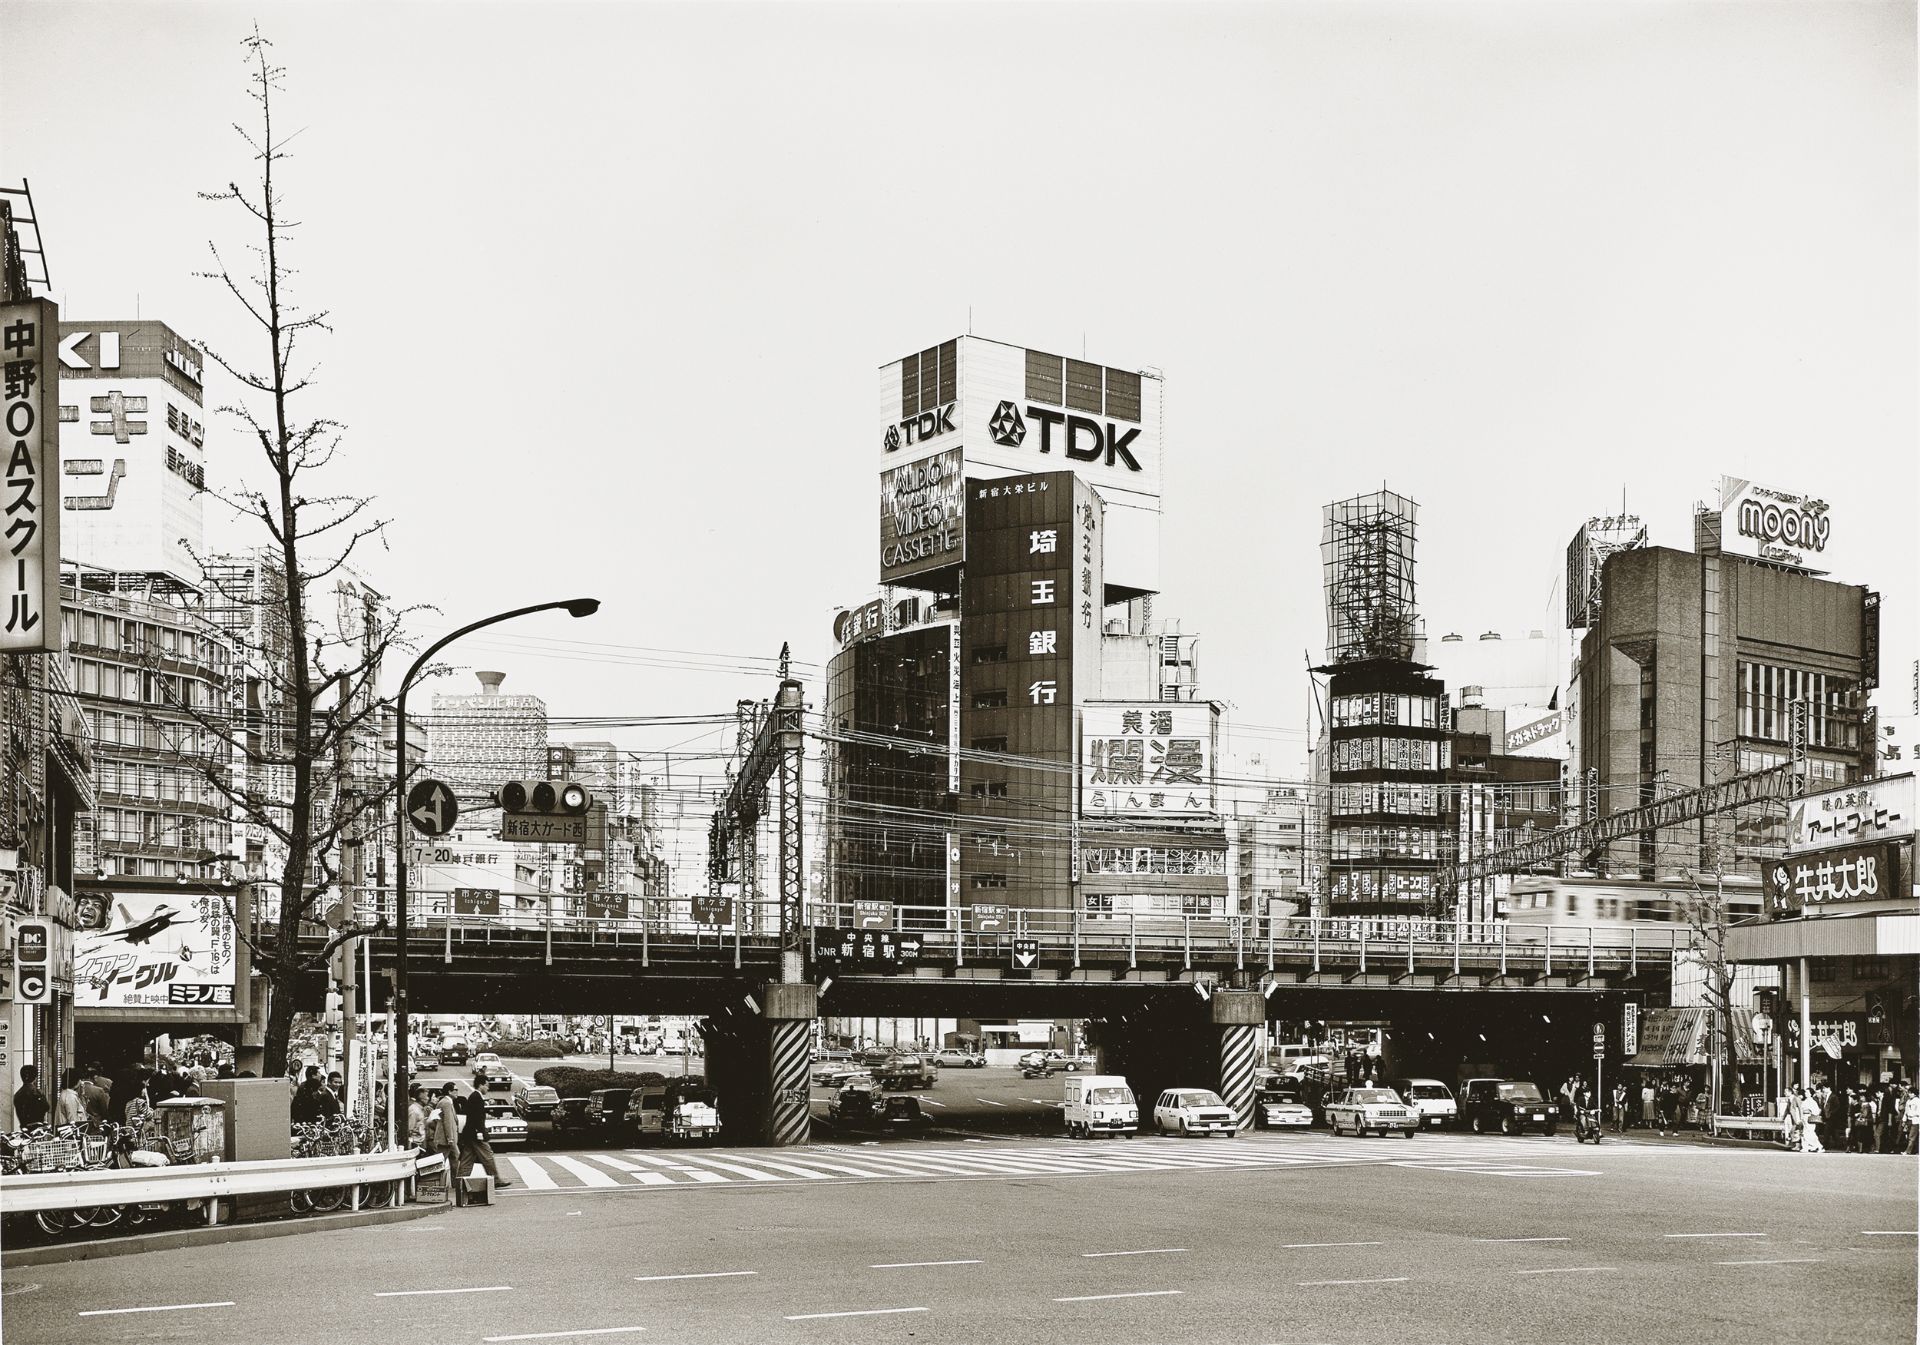 Thomas Struth. ”Kreuzung an Shinju-ku Station Tokyo”. 1986/1987